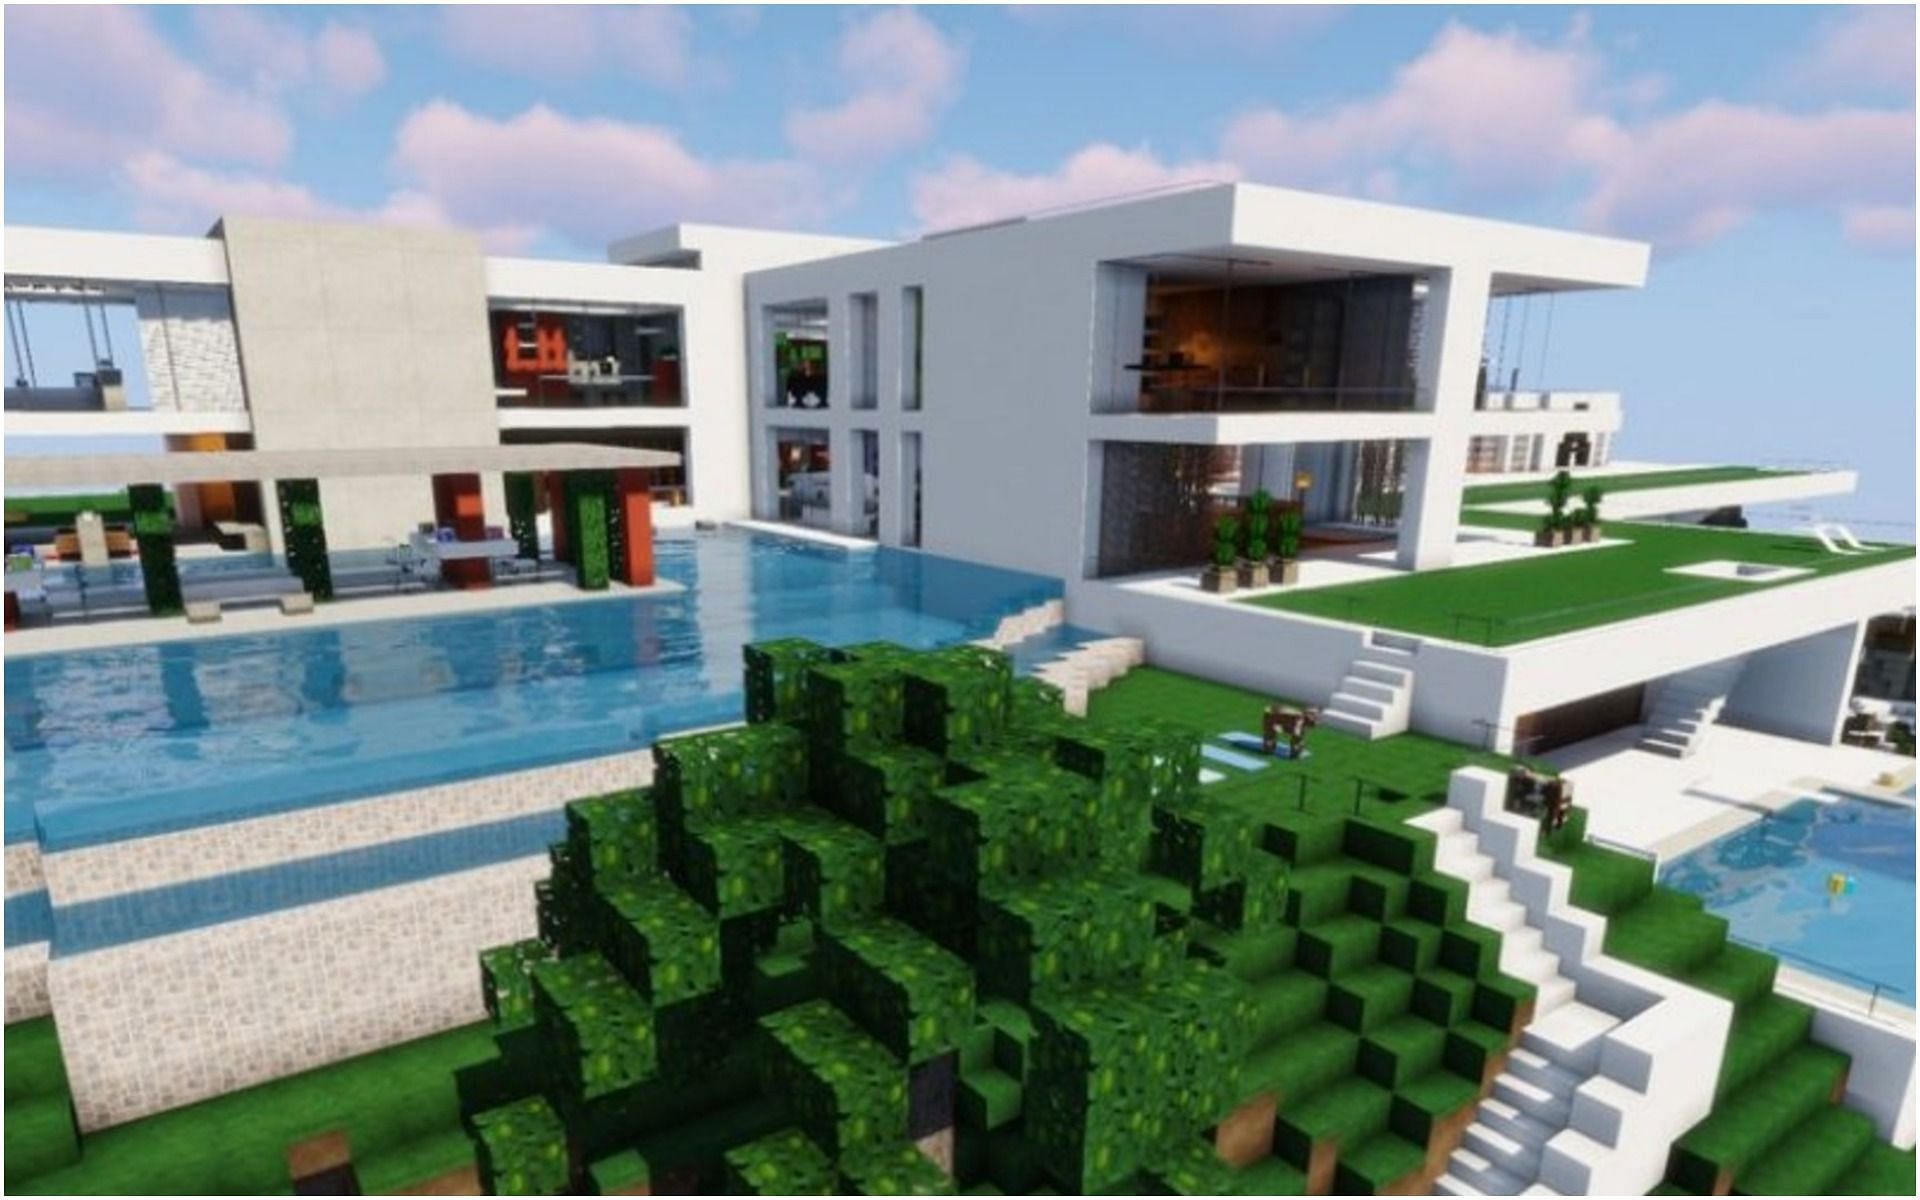 A modern house in Minecraft (Image via Minecraft)